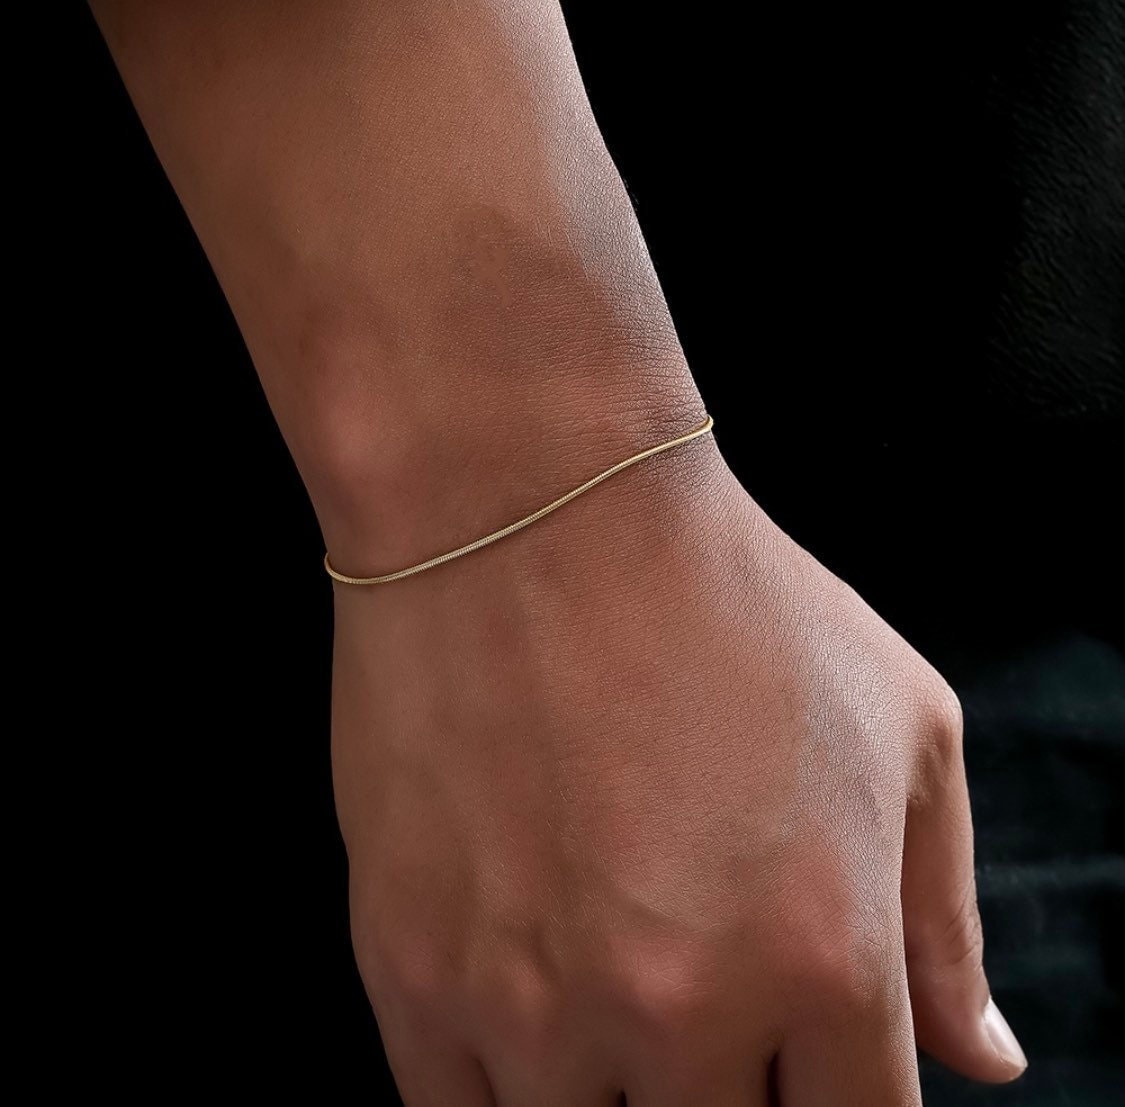 22K Yellow gold Men's Bracelet Beautifully handcrafted diamond cut design 1  | eBay